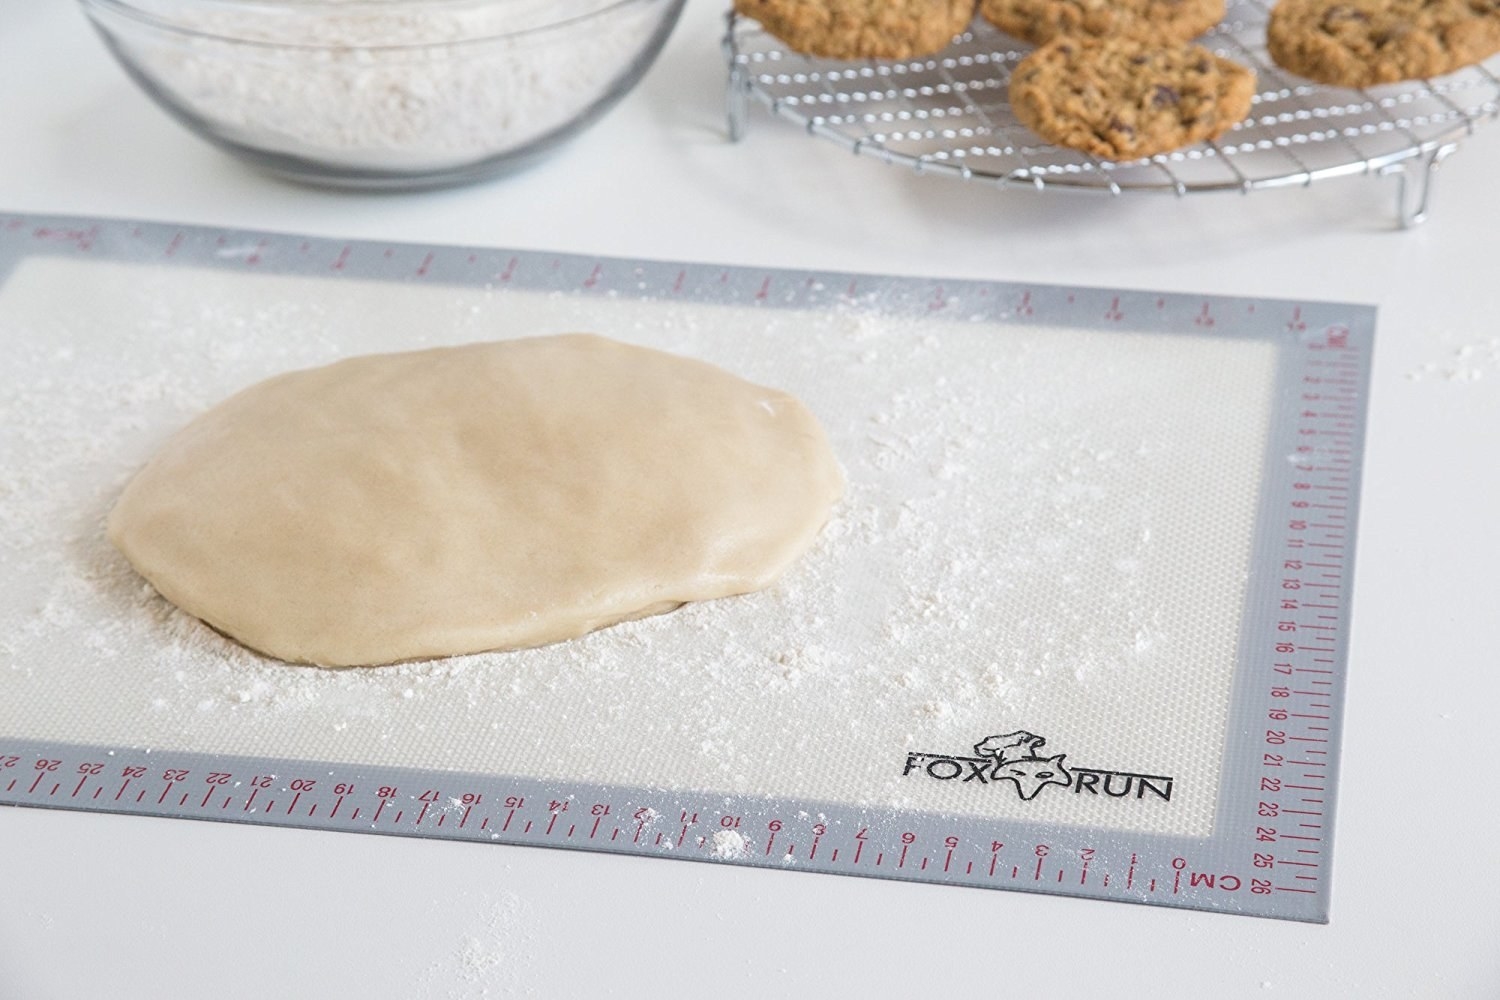 a lump of dough on the baking mat